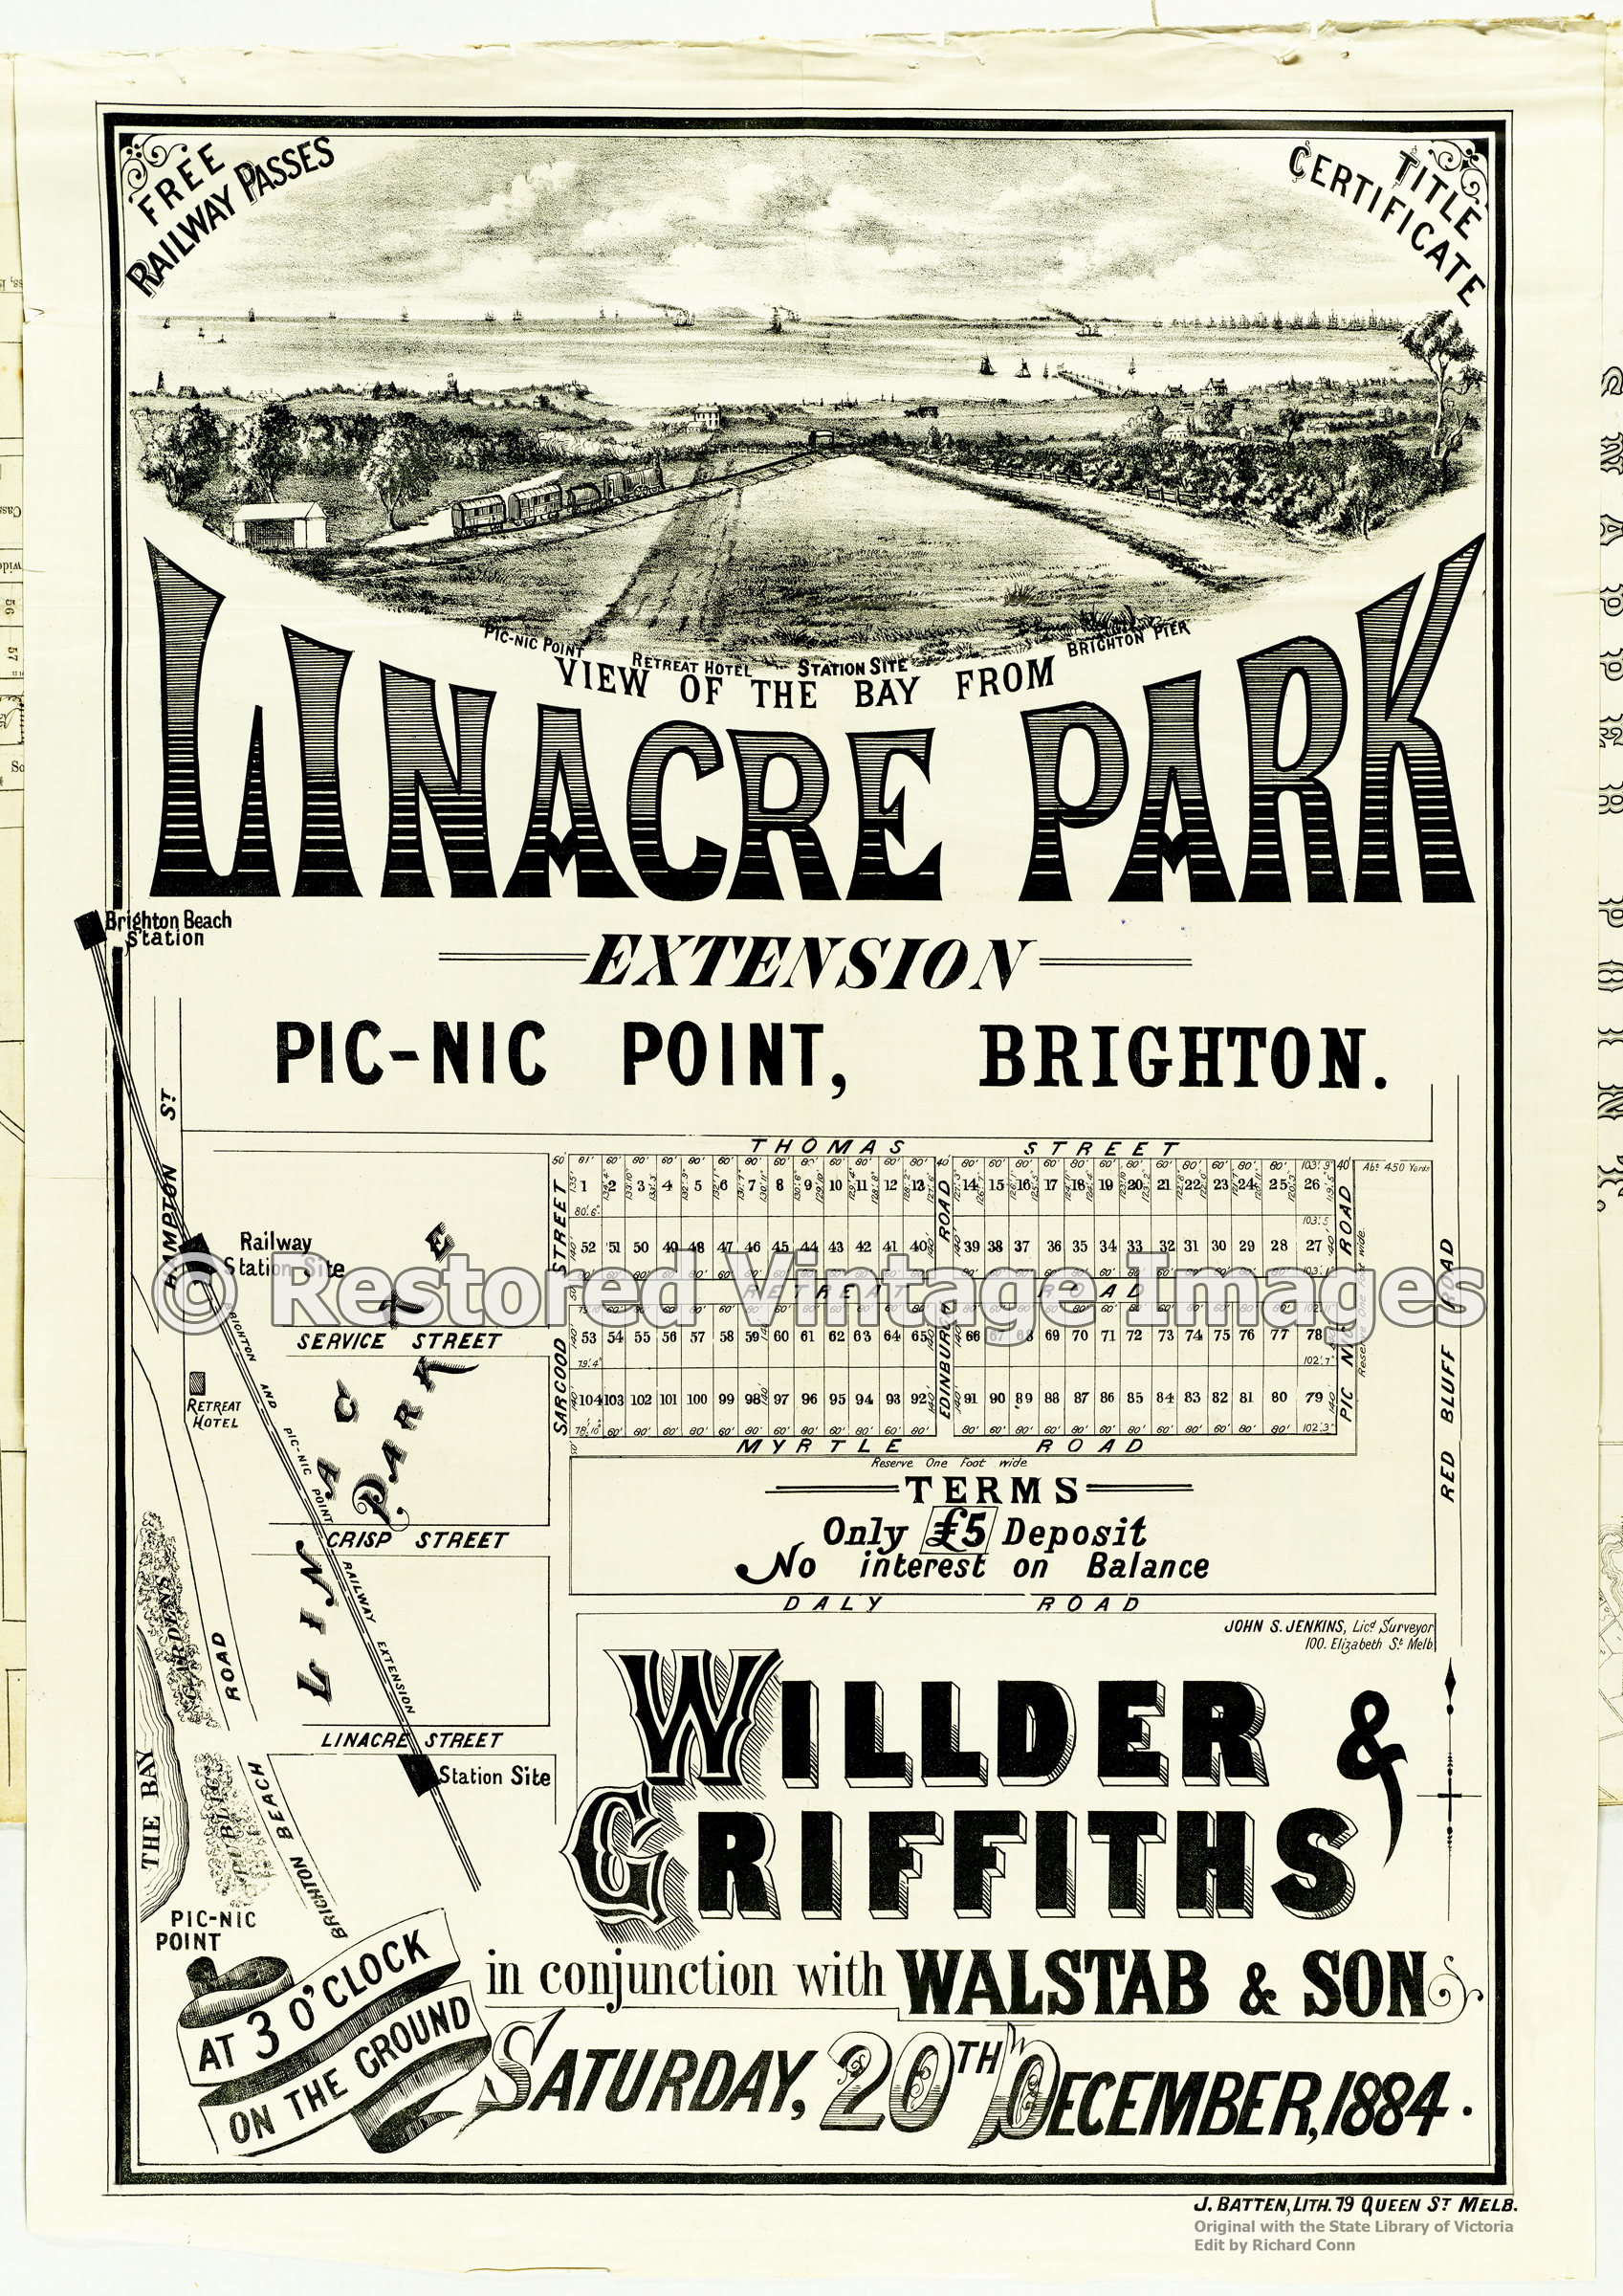 Linacre Park Extension 20th December 1884 – Hampton